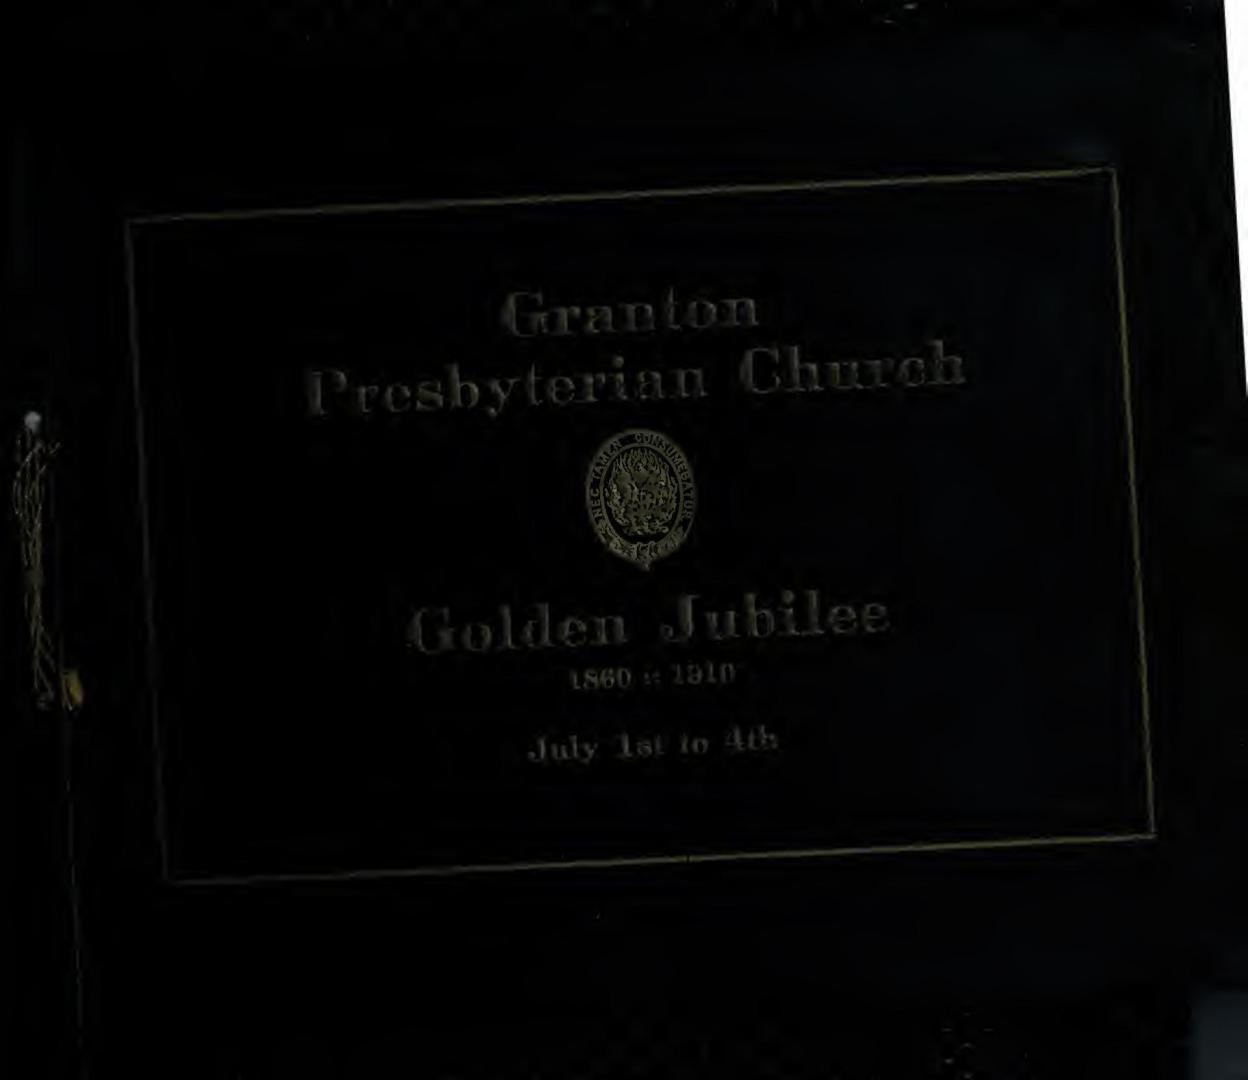 Granton Presbyterian Church : golden njubilee 1860-1910, July 1st to 4th